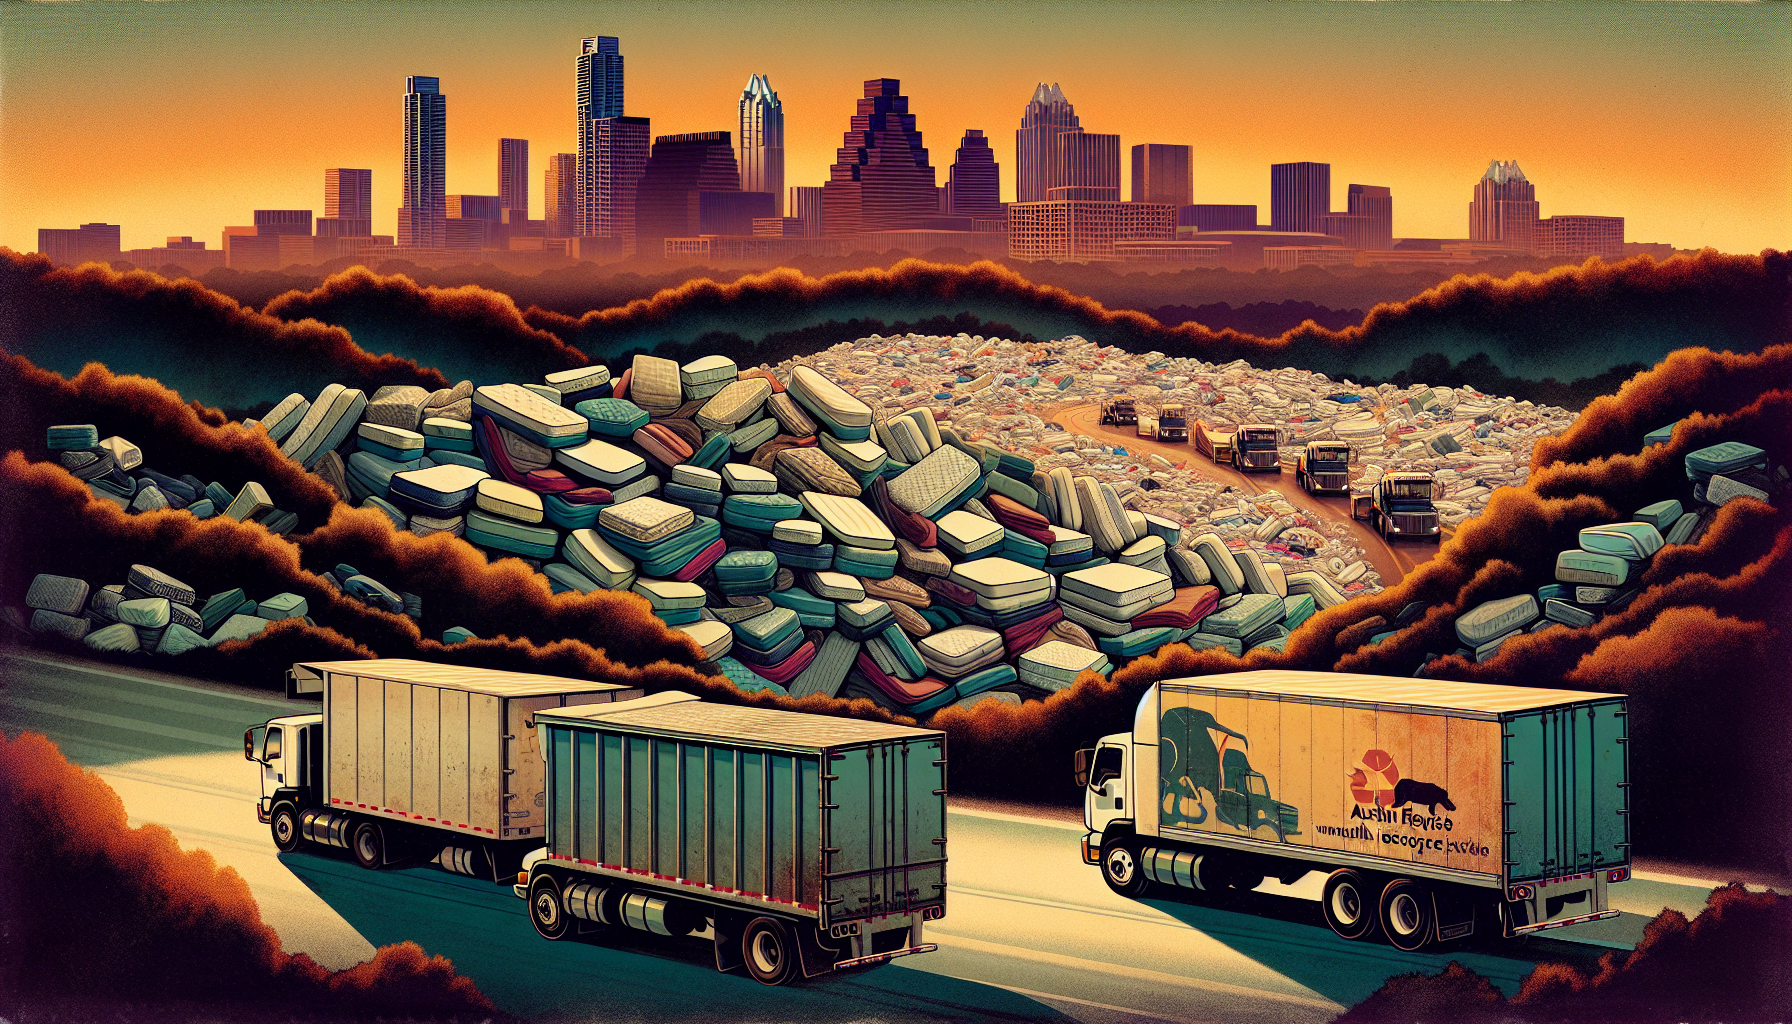 Illustration of landfill disposal as the last resort in Austin